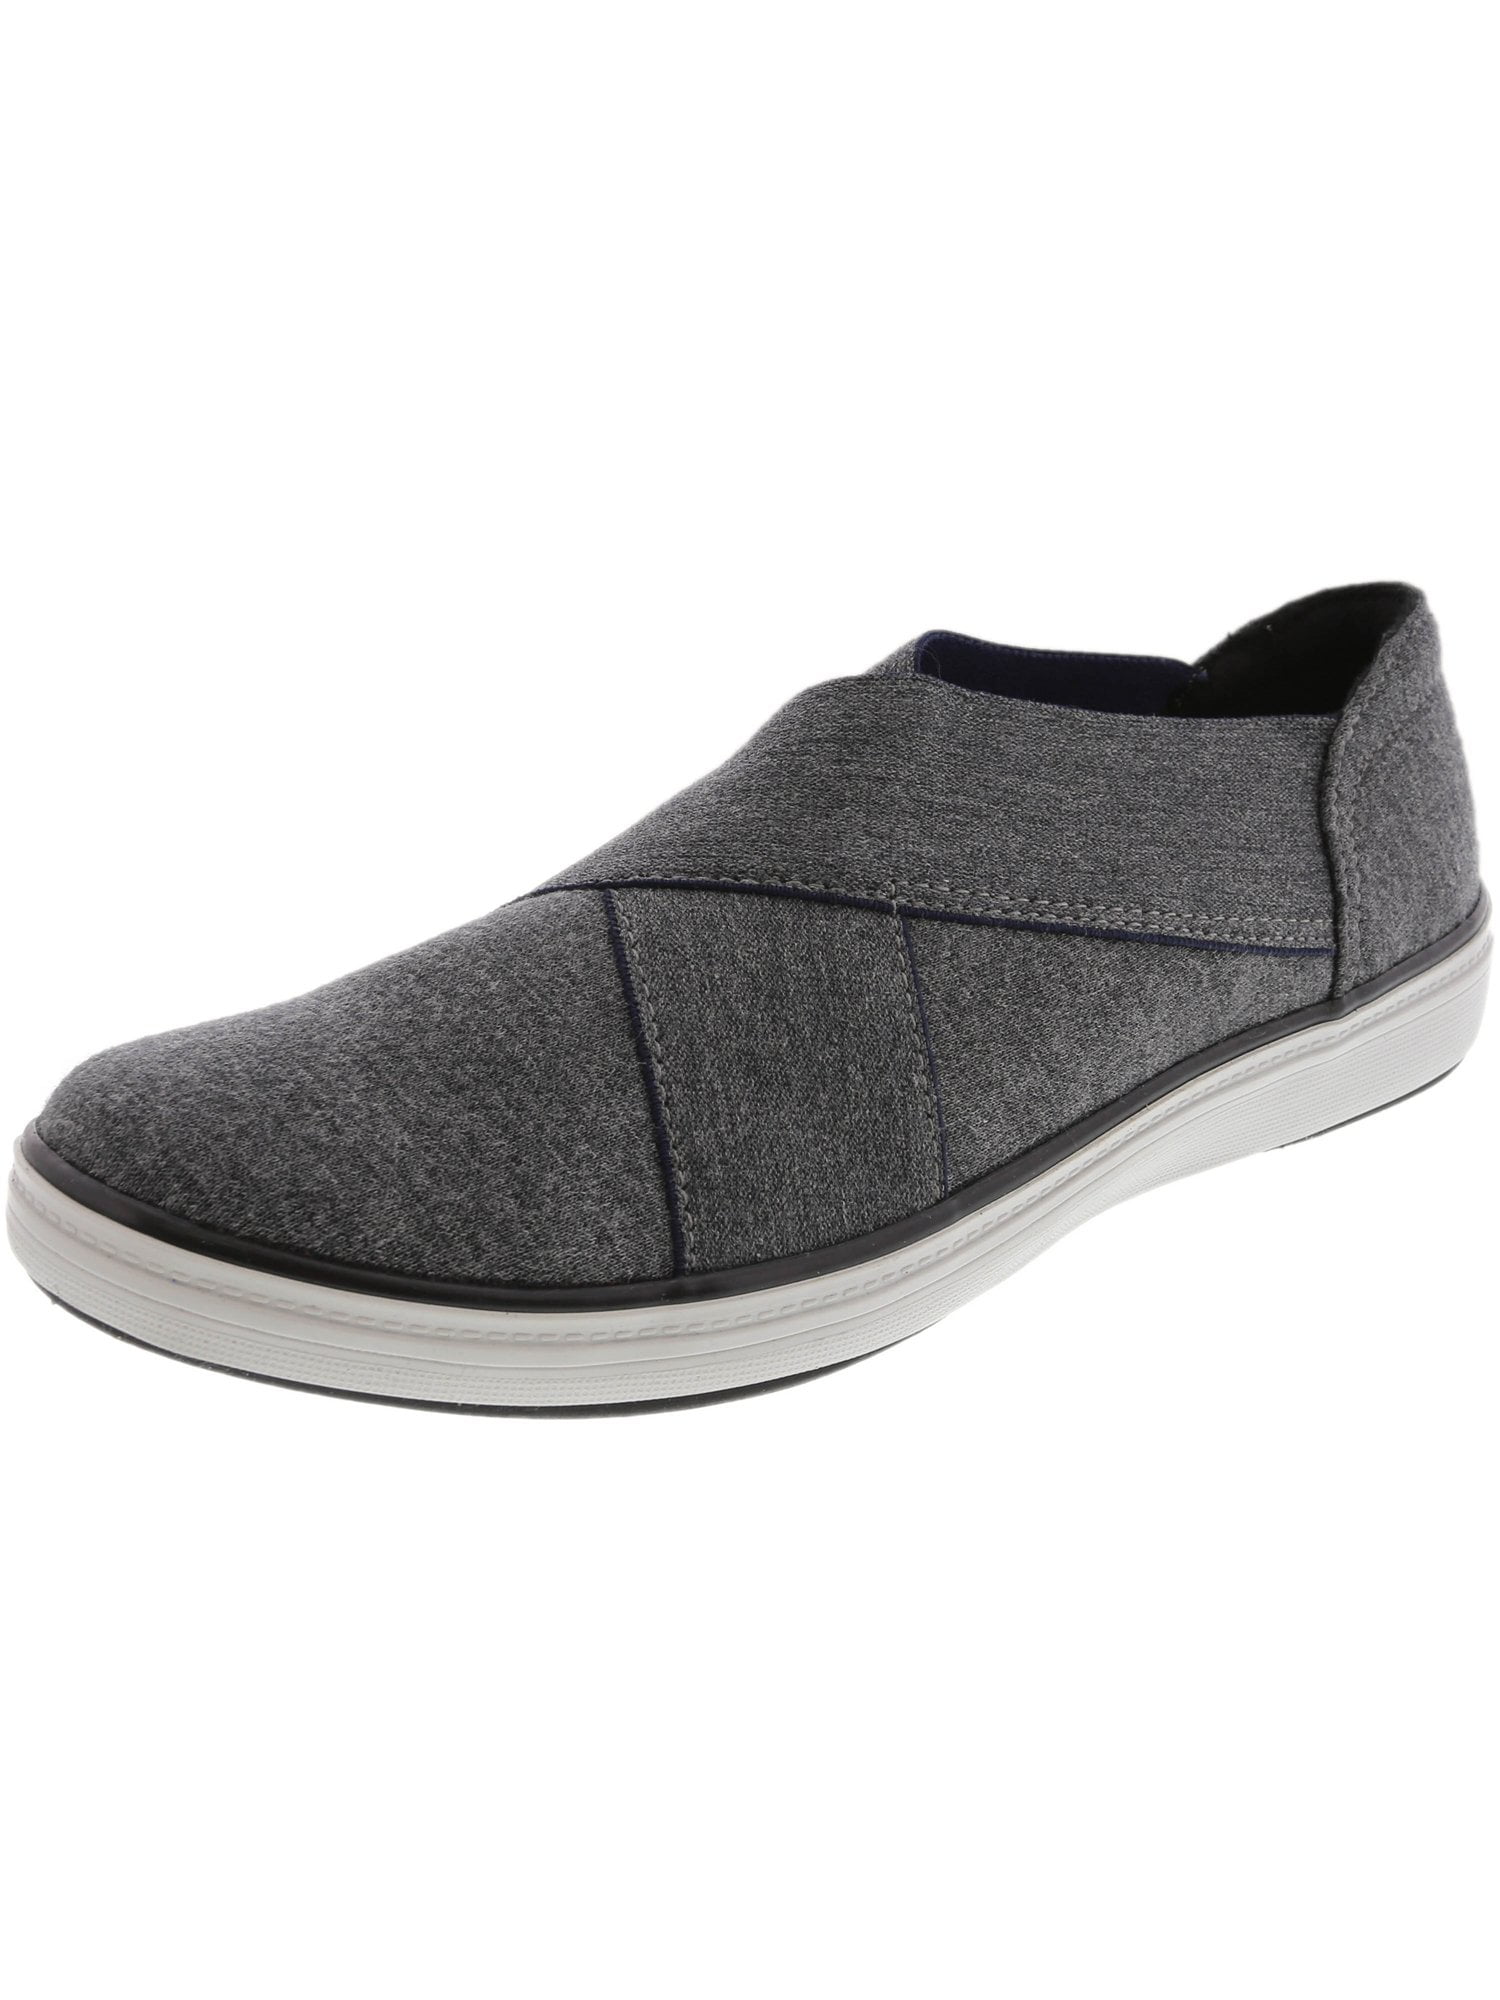 Fabric Slip-On Shoes - 6M | Walmart 